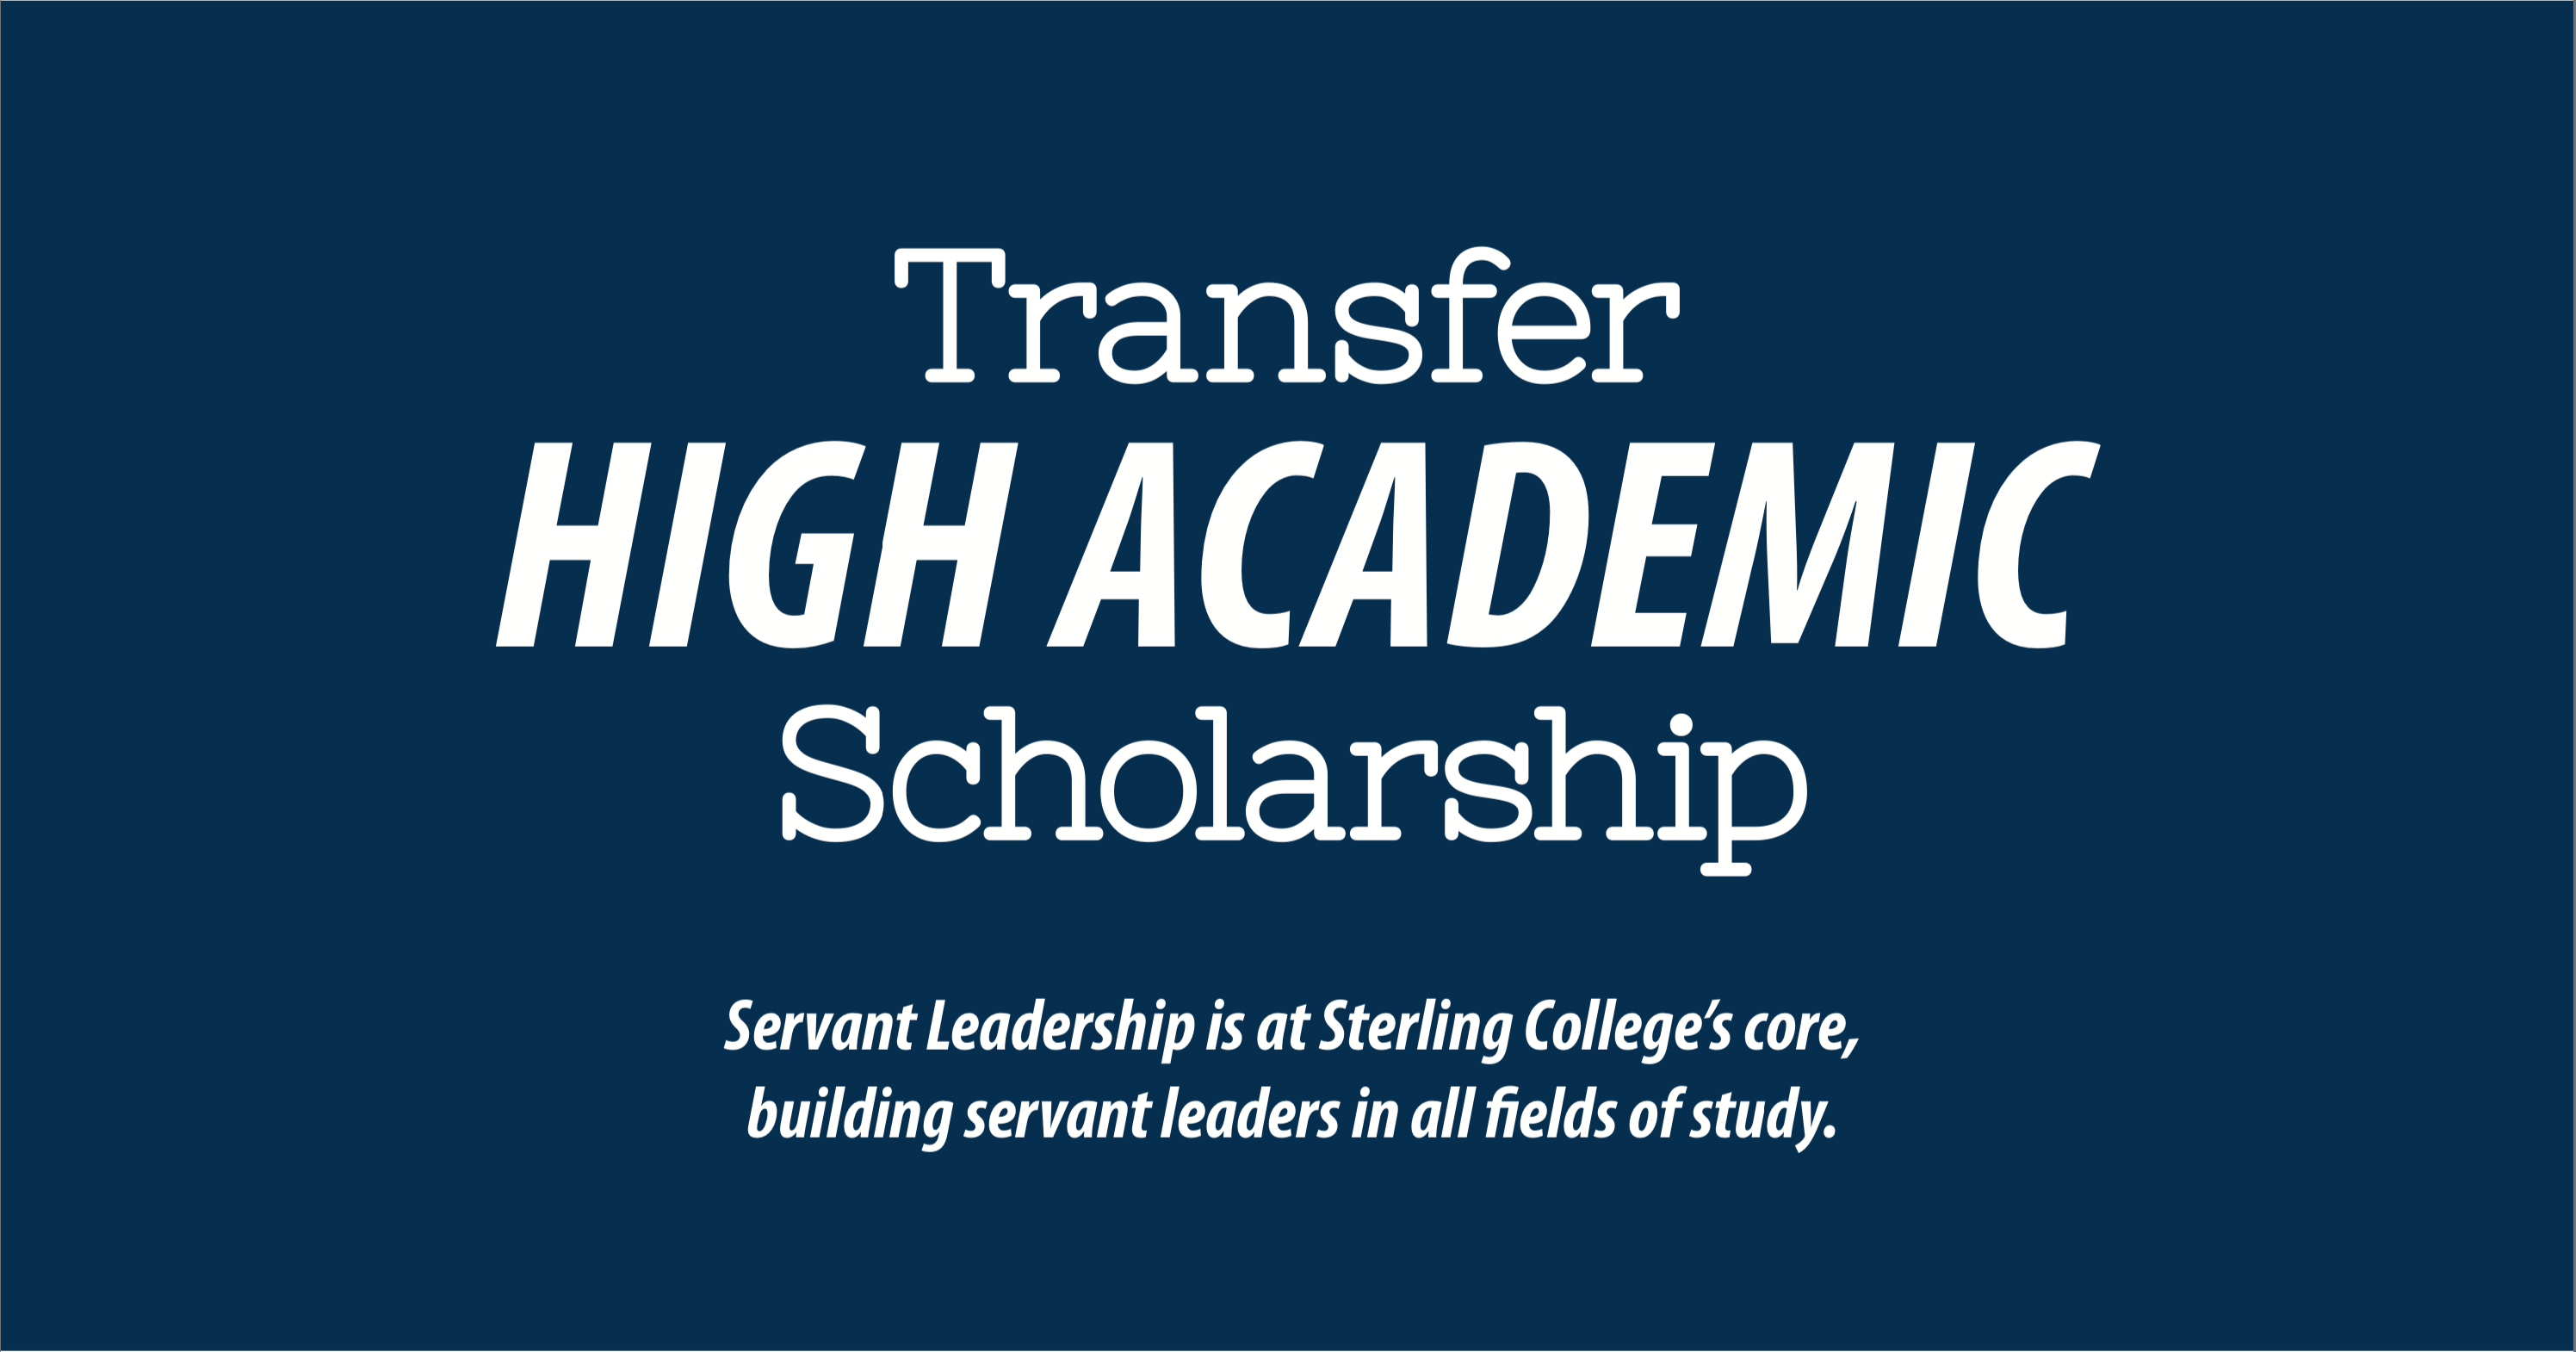 High Academic Transfer Scholarship